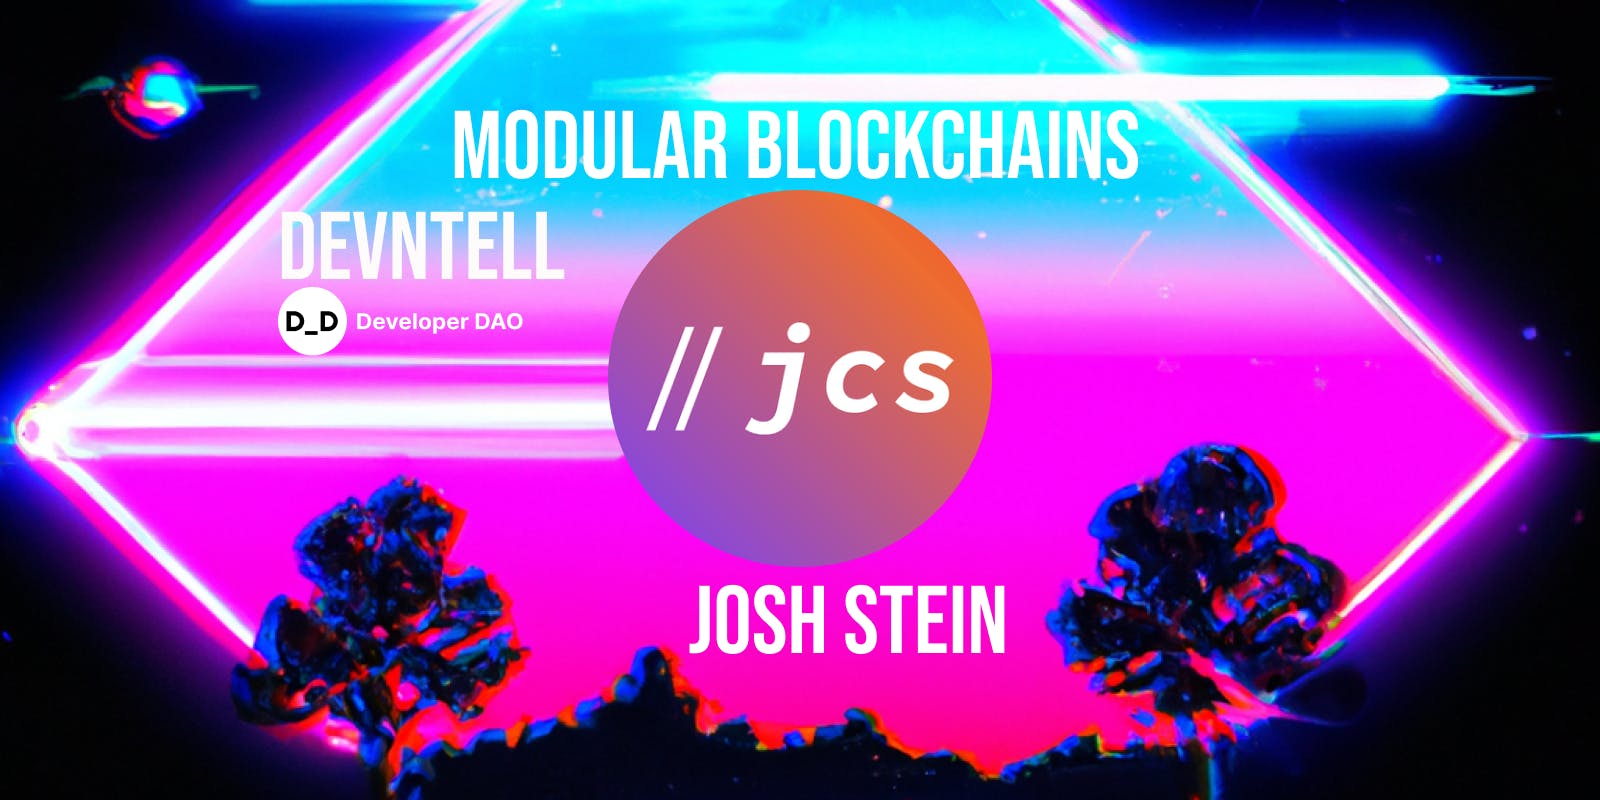 DevNTell - Modular Blockchains